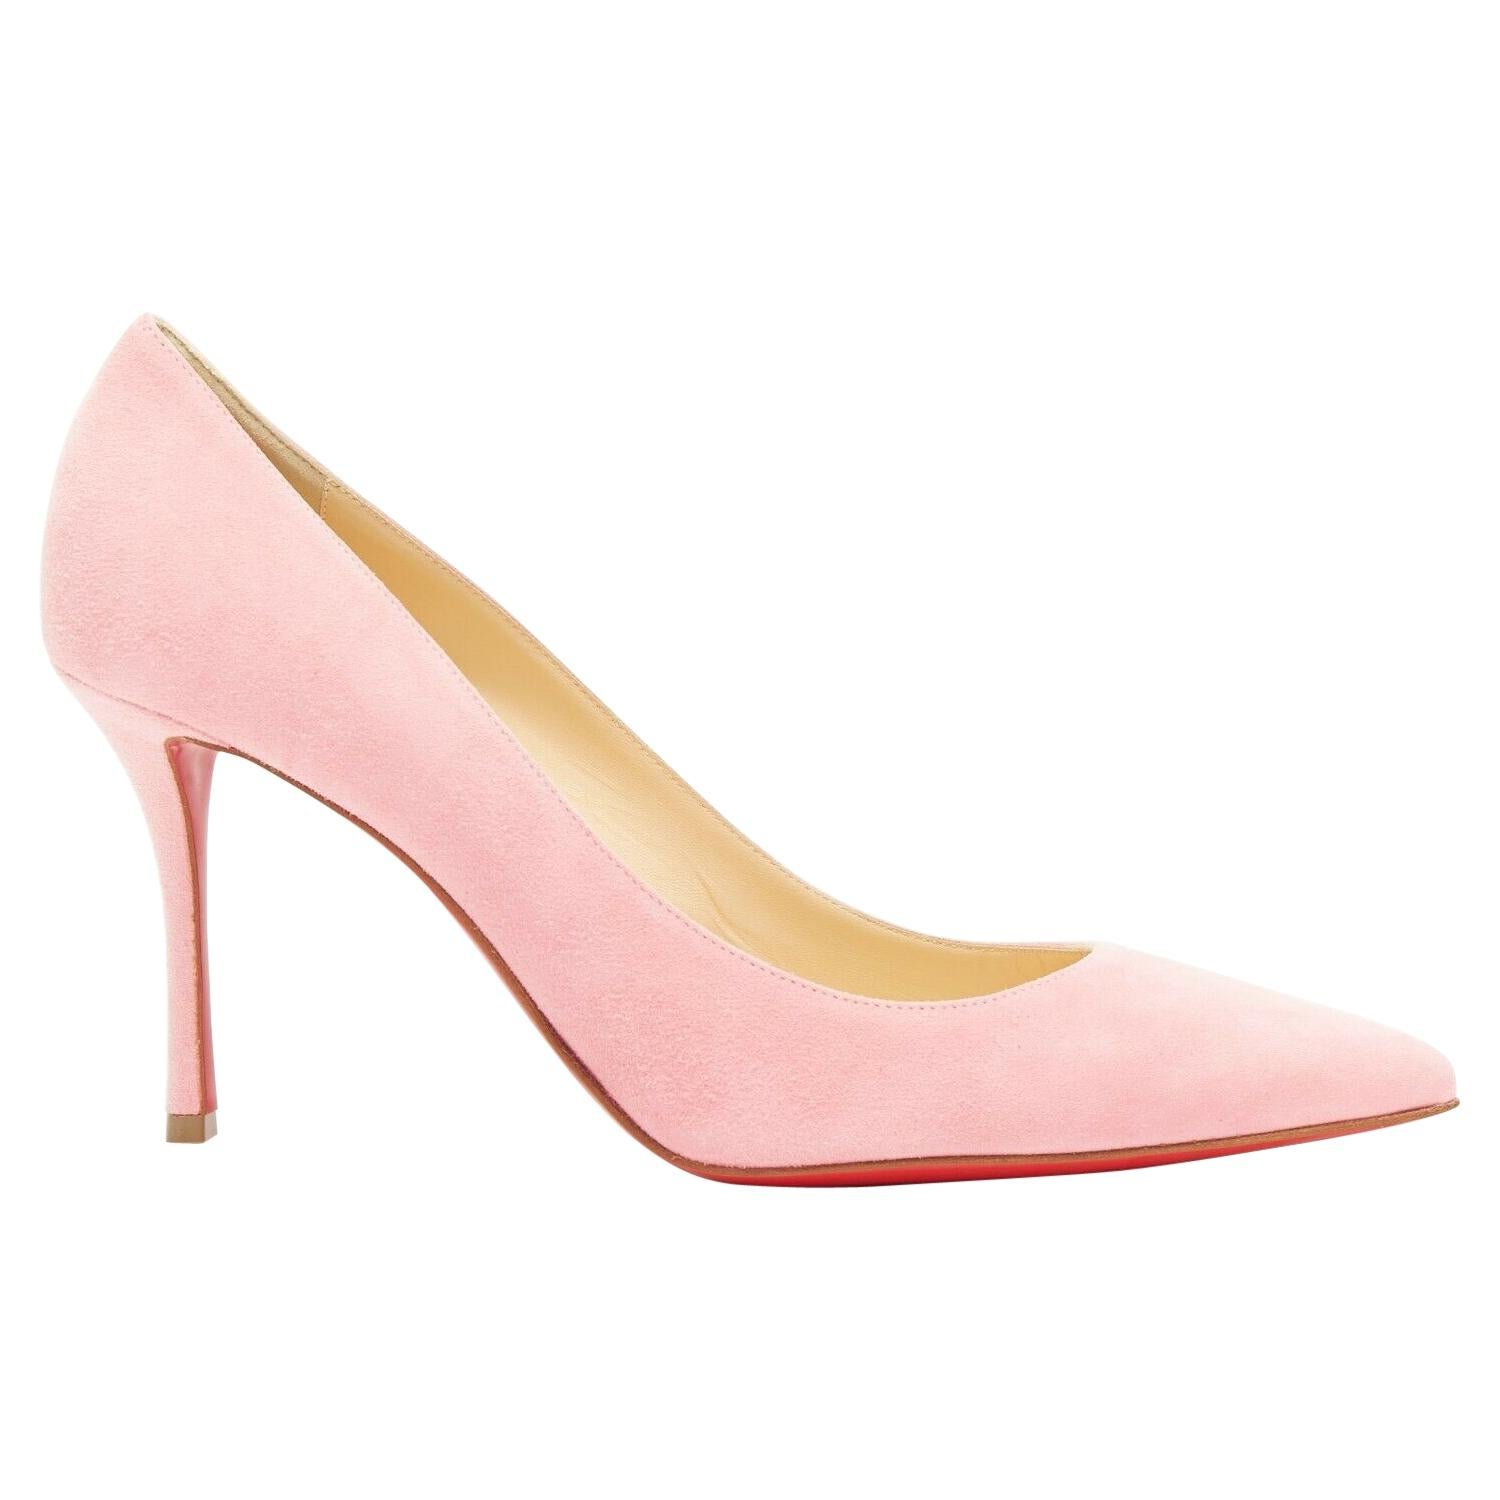 Louise et Cie Kalkin Demur Pink Suede heels size 9.5